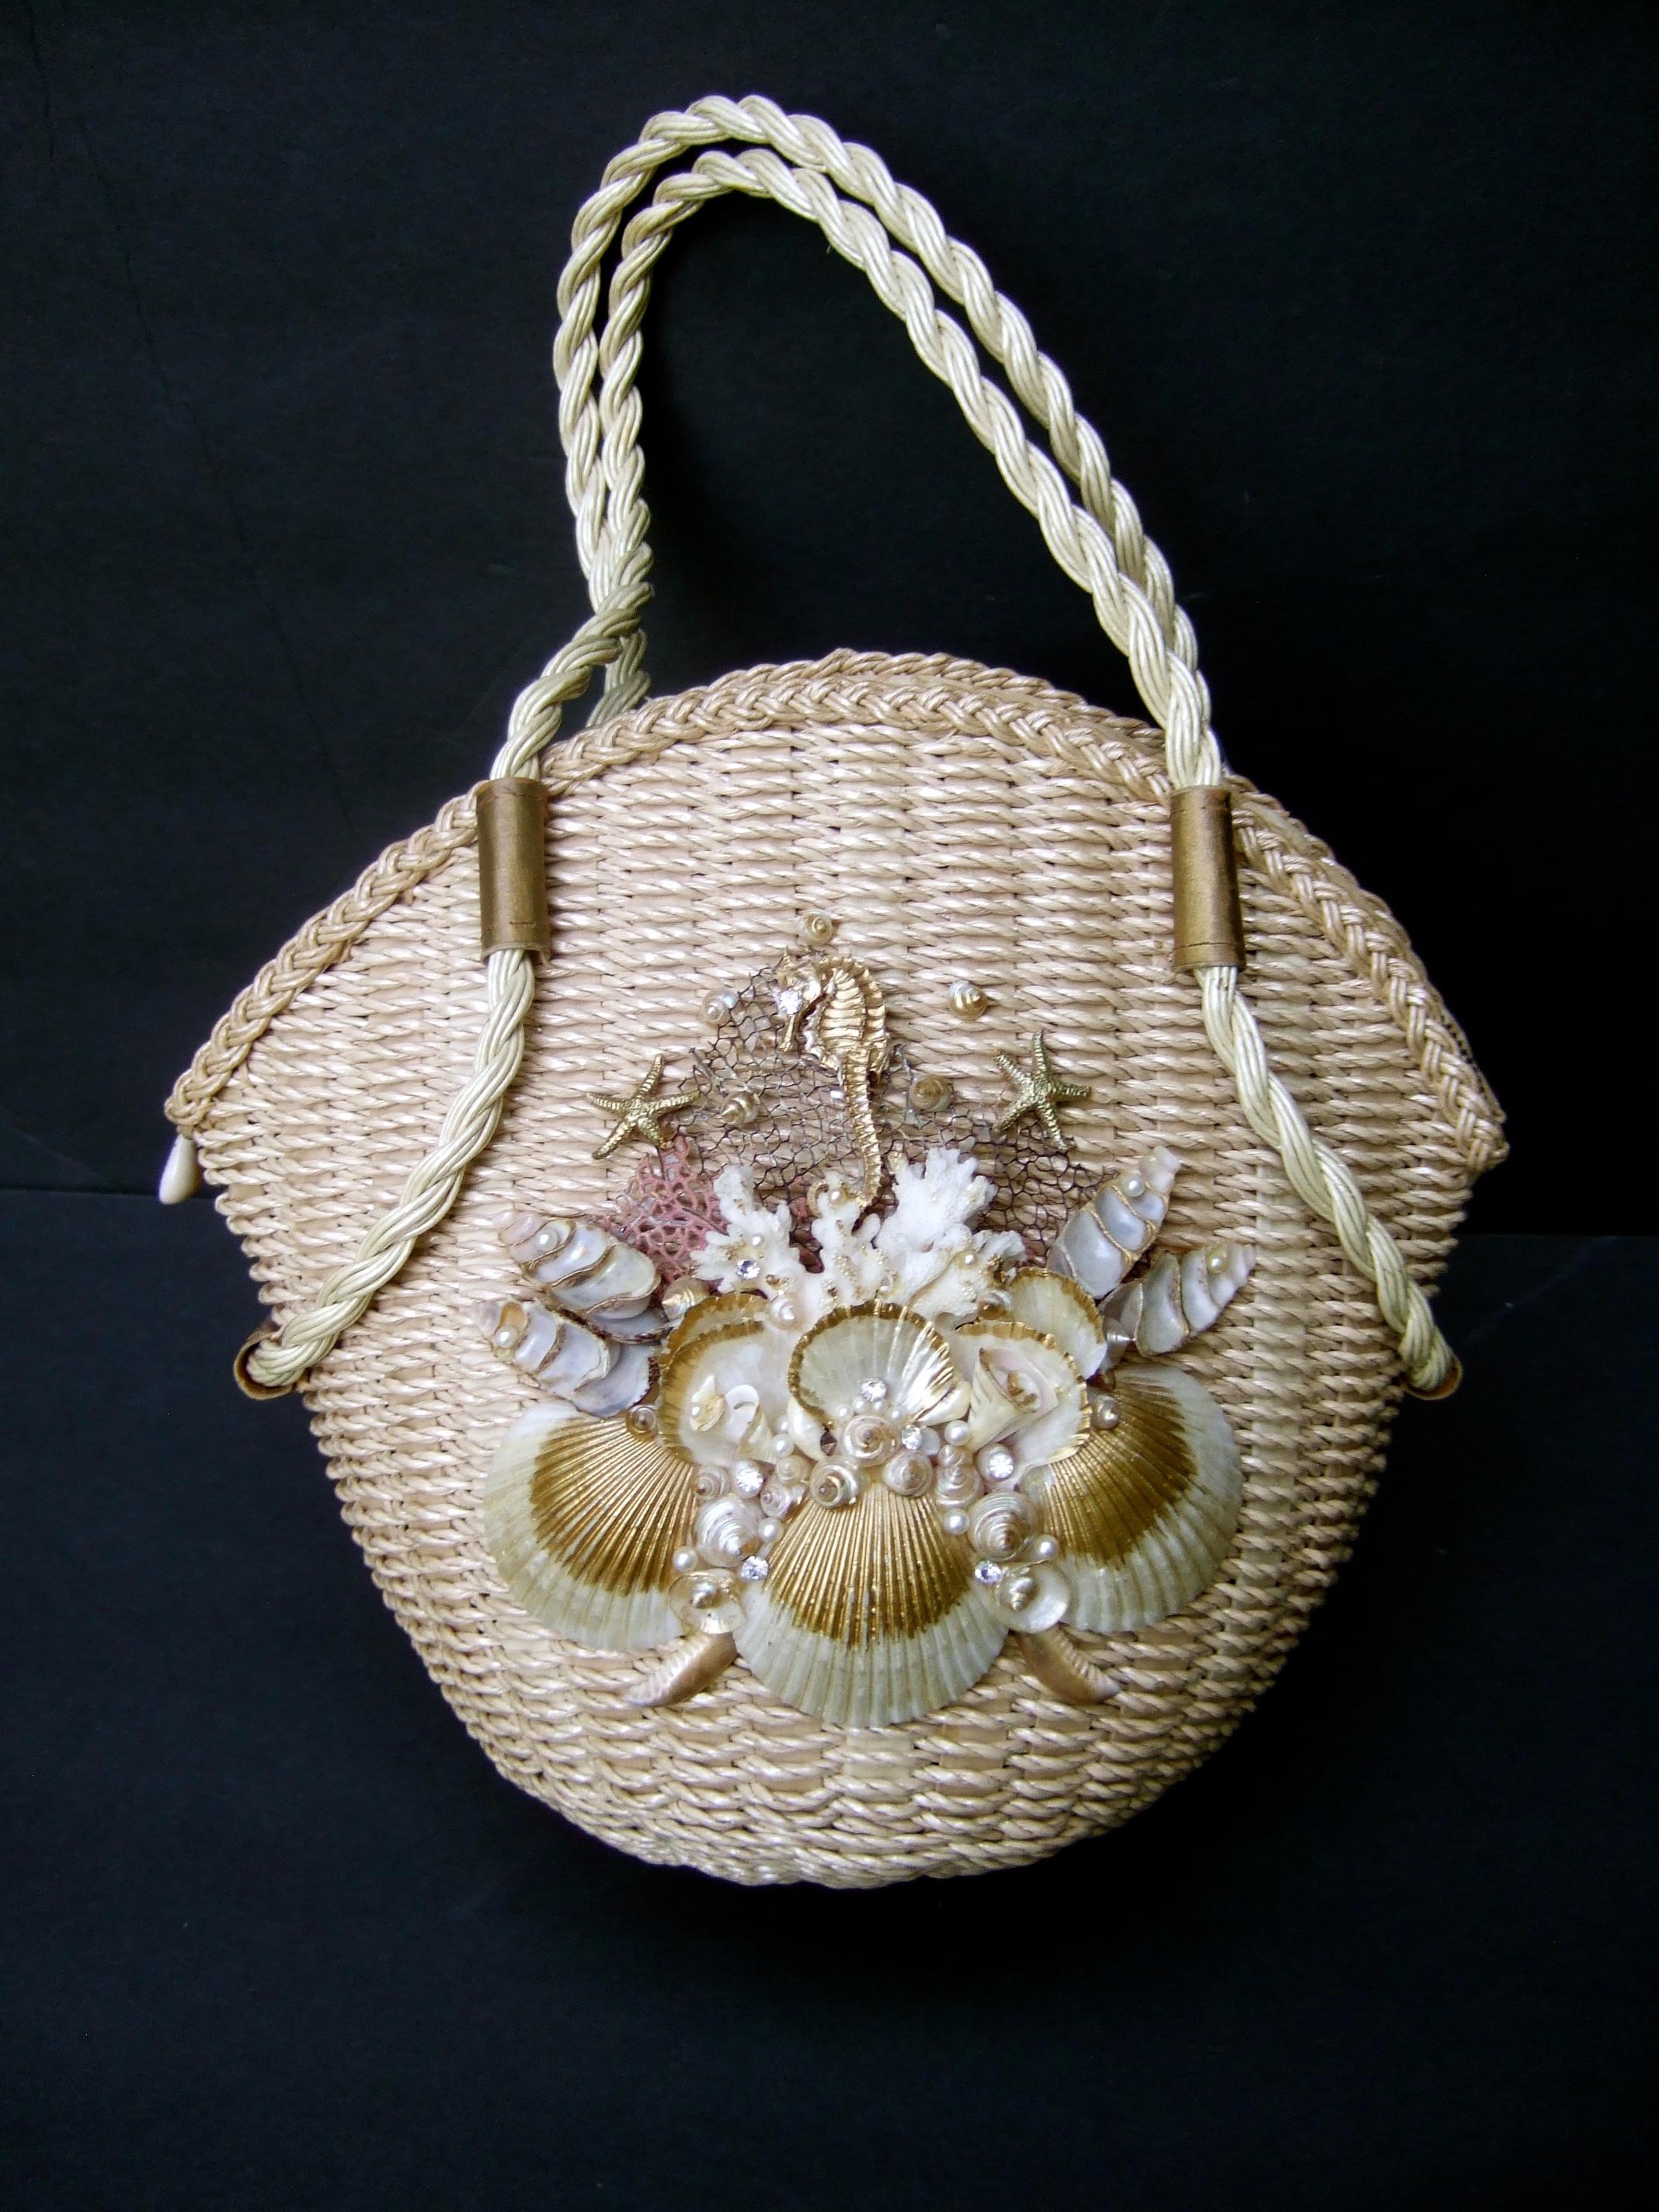 Charming Handmade Artisan Sea Life Woven Wicker Rope Summer Handbag c 1970 For Sale 2